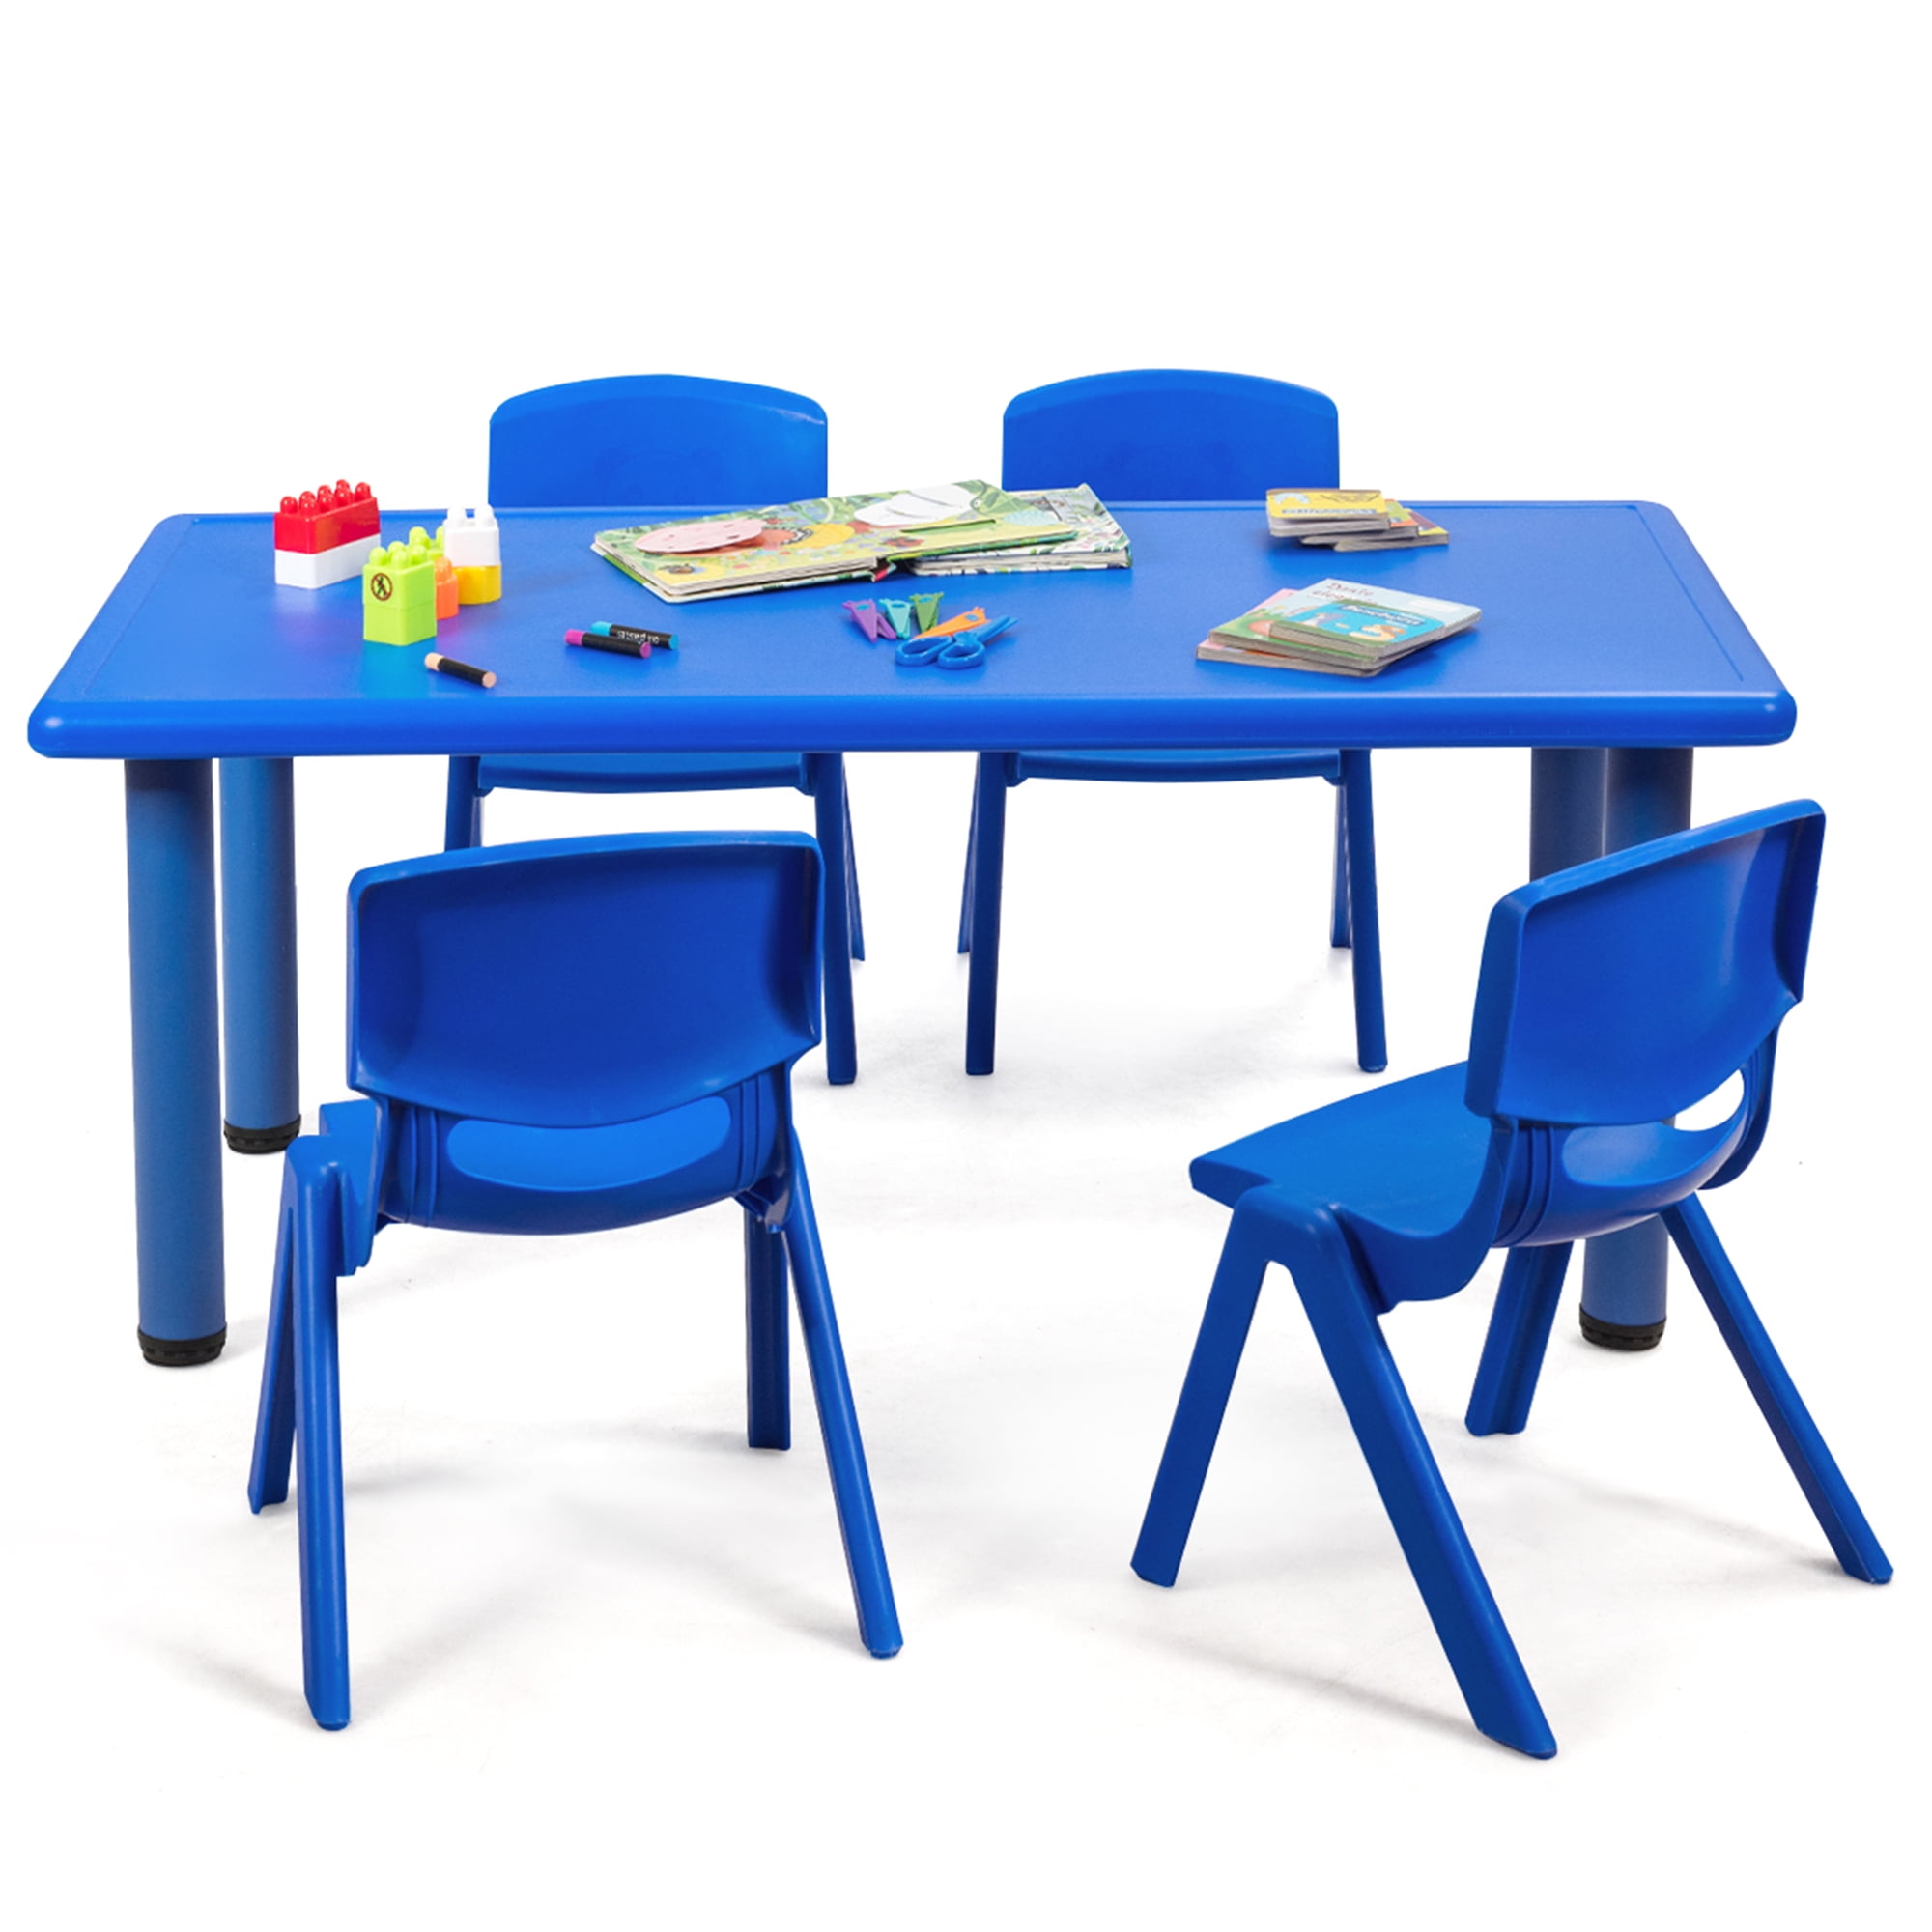 School table chair